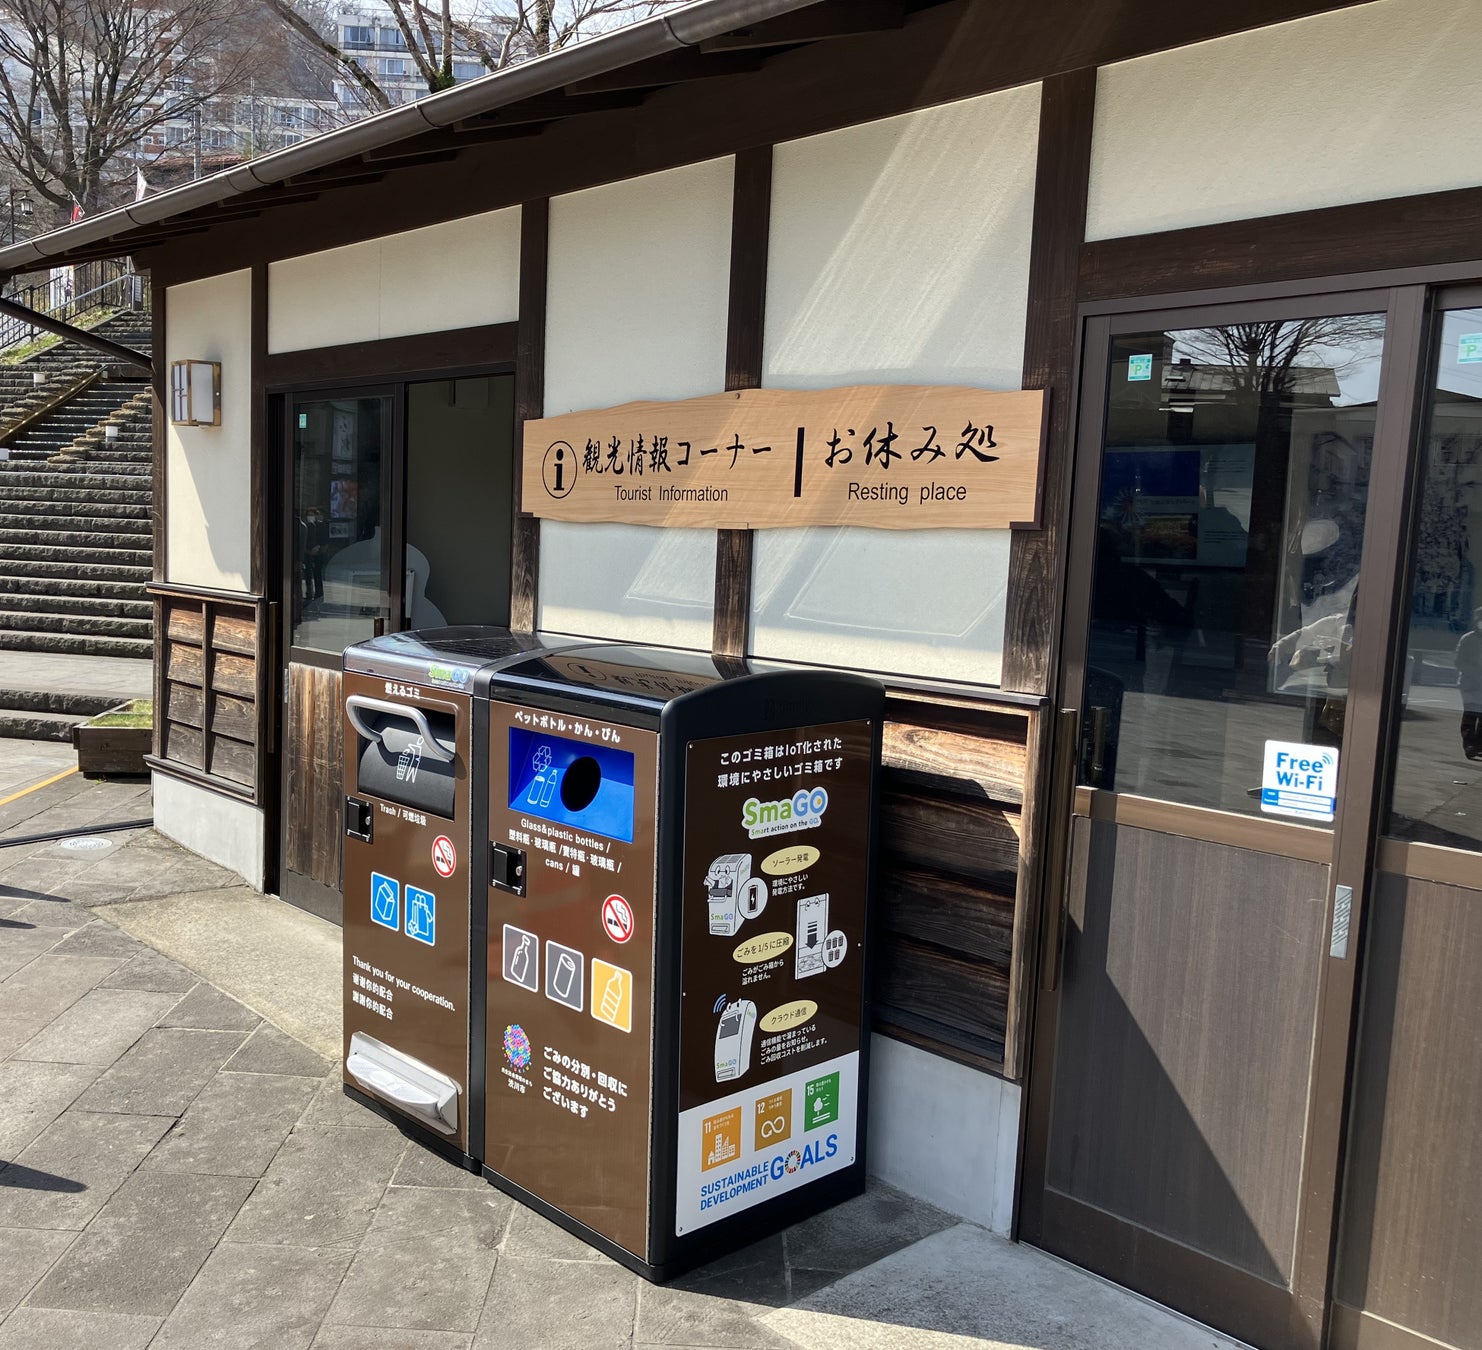 IoTスマートゴミ箱“SmaGO”、3月31日から群馬県渋川市「伊香保温泉」にて運用開始のサブ画像2